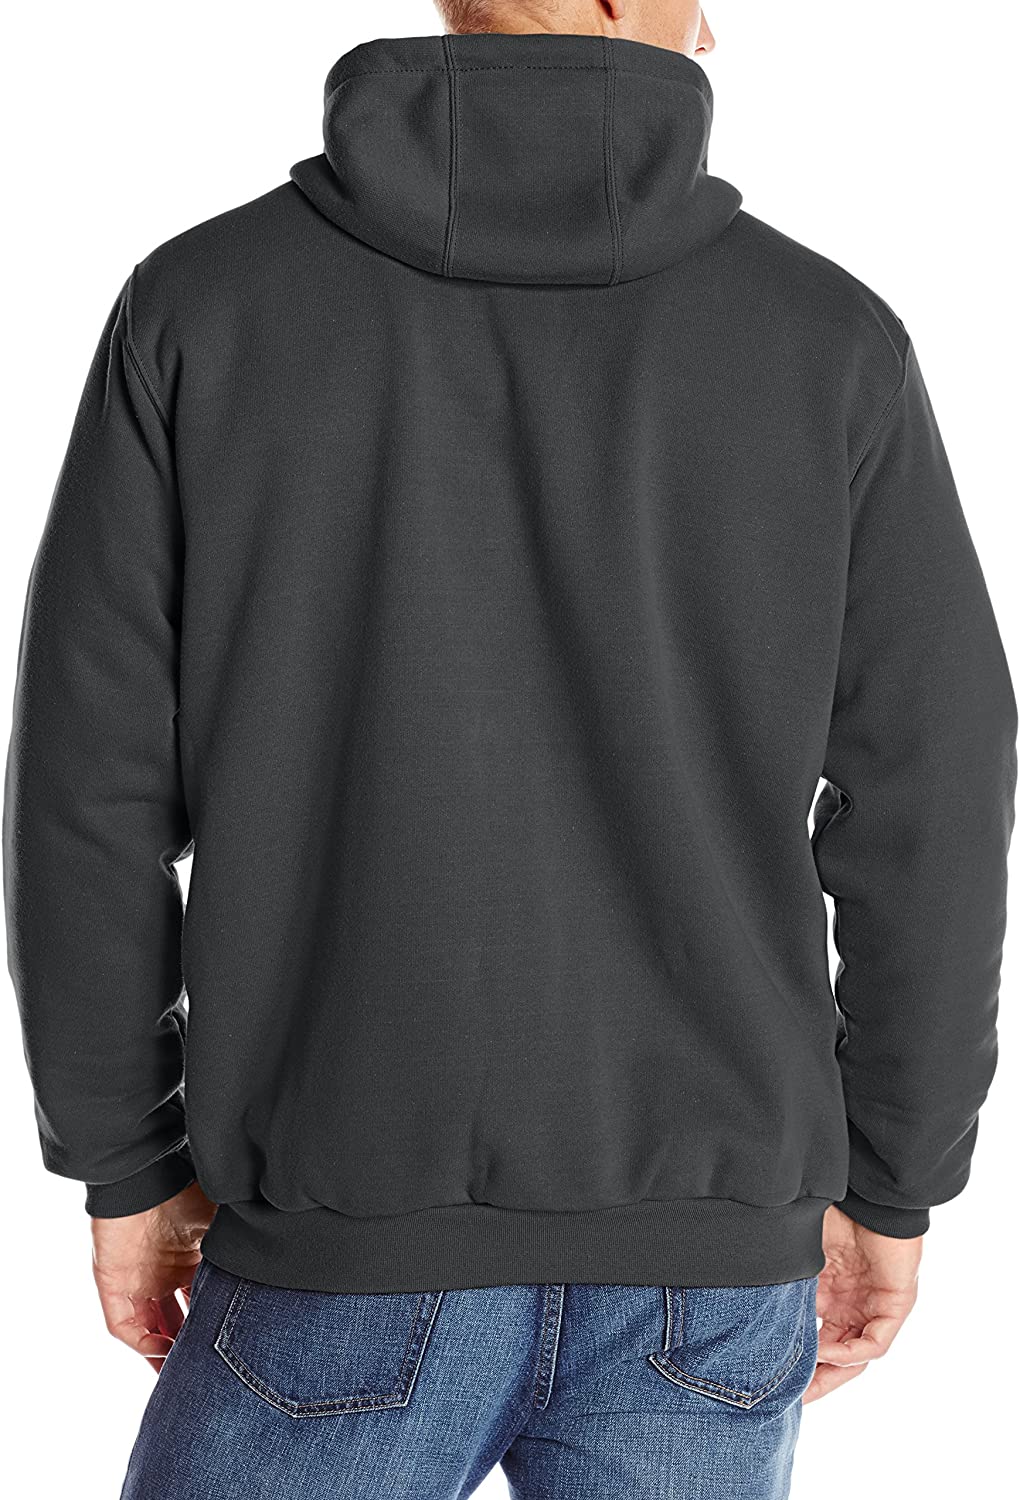 Carhartt Men's Big & Tall Rutland Thermal Lined Zip Front Sweatshirt ...